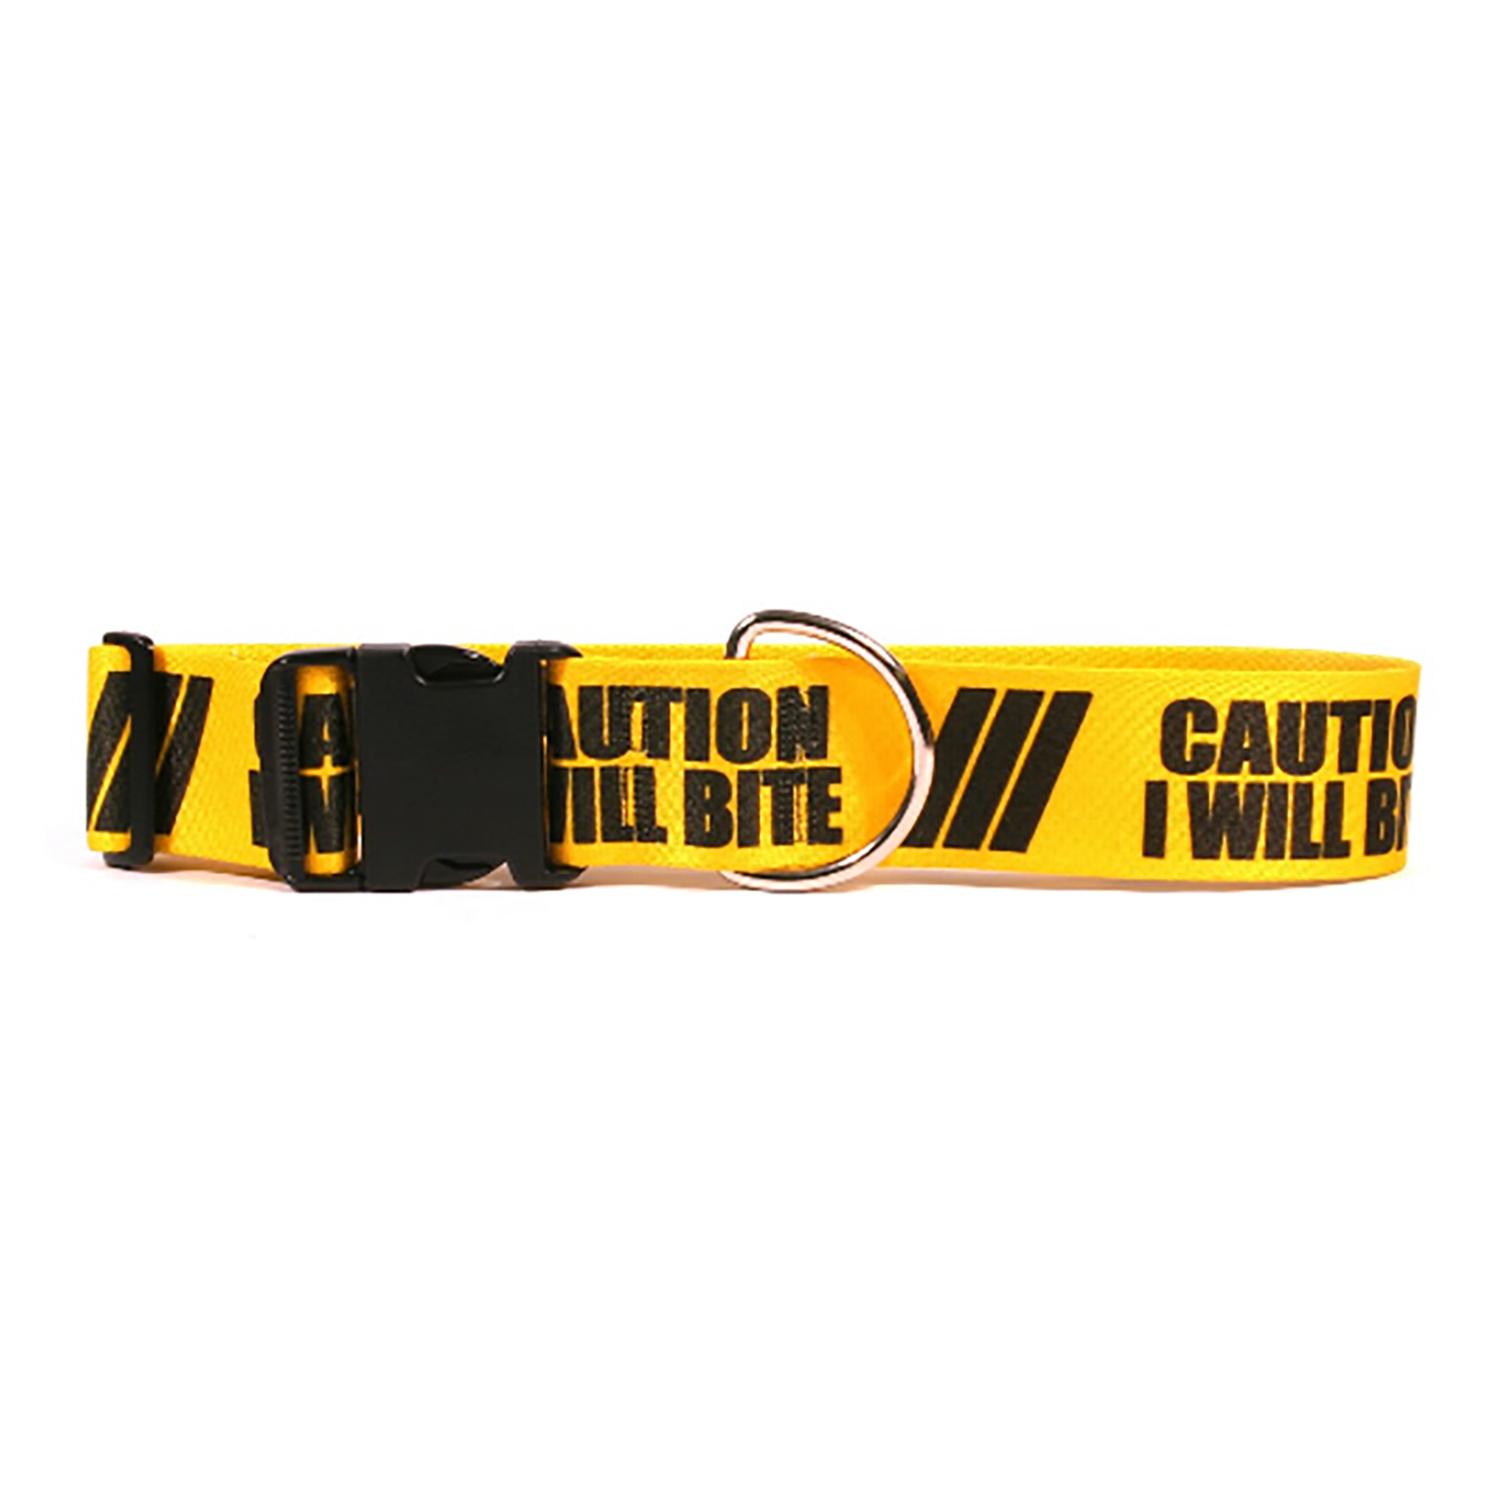 Caution Dog Collar by Yellow Dog - I Will Bite